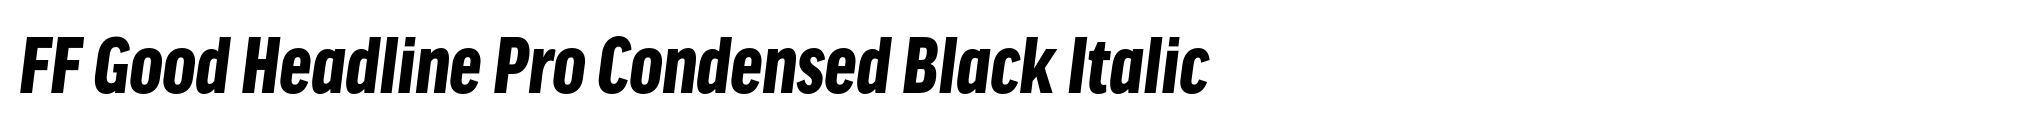 FF Good Headline Pro Condensed Black Italic image